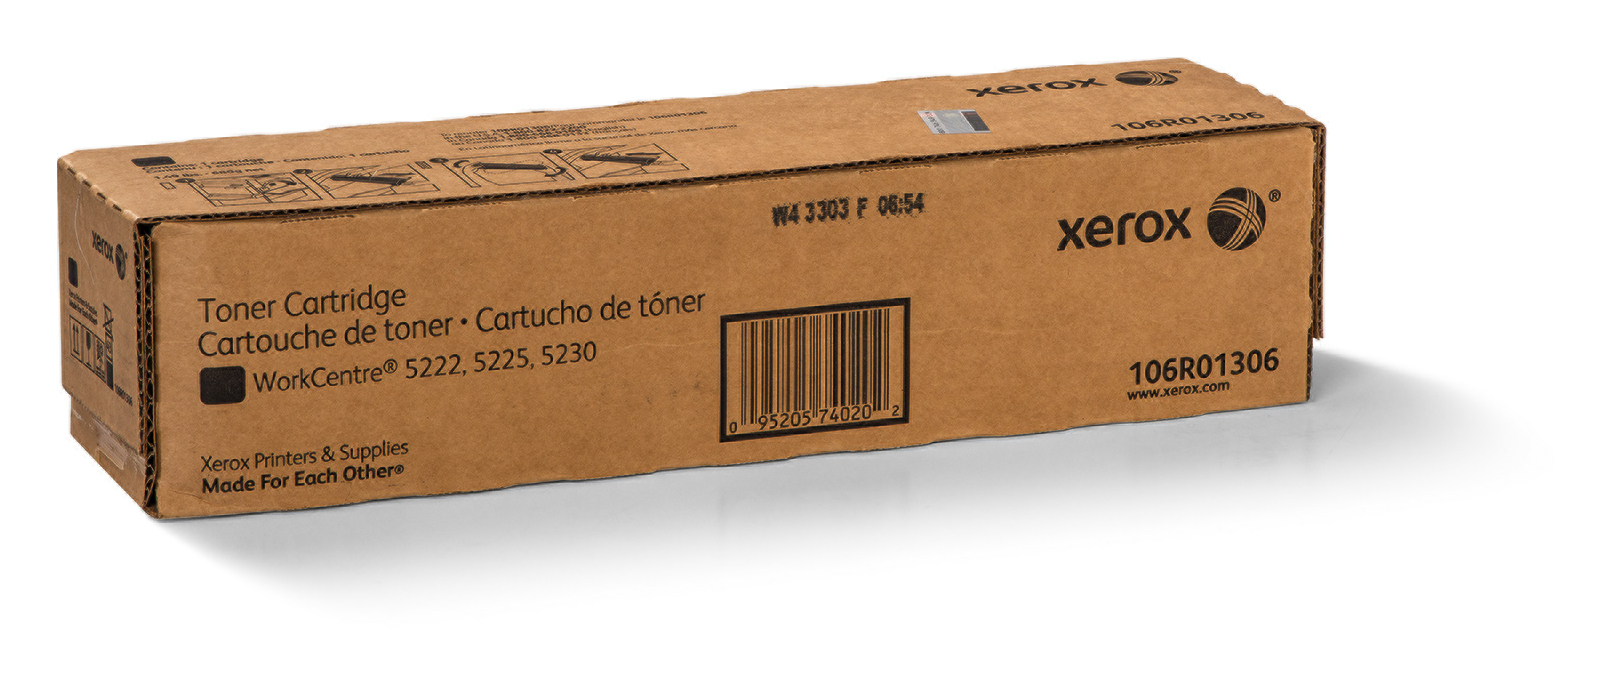 Black Toner Cartridge (Sold) 106R01306 Genuine Xerox Supplies